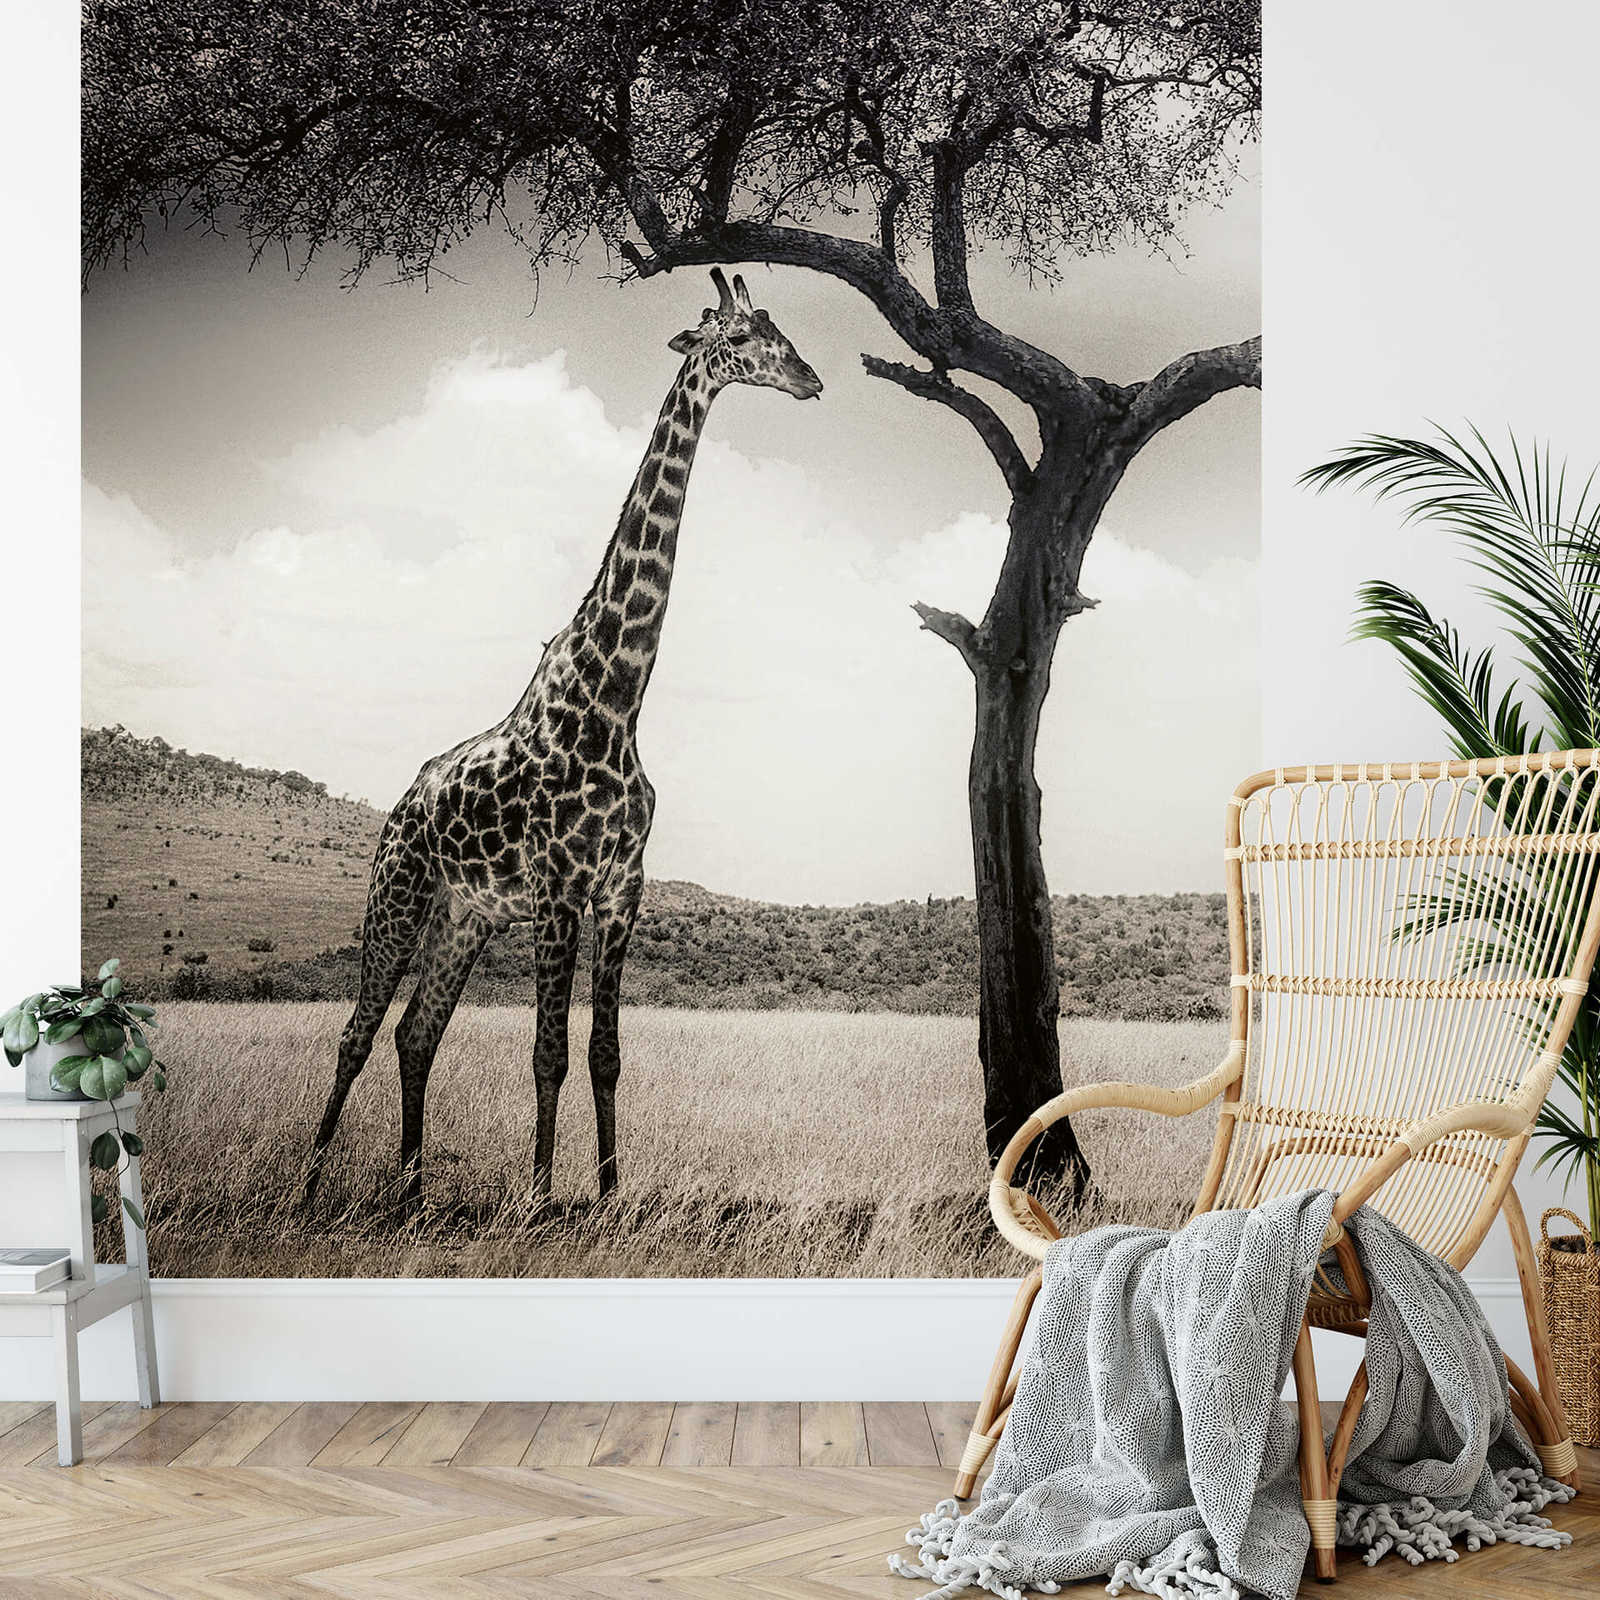             Photo wallpaper giraffe in savannah - grey, white, black
        